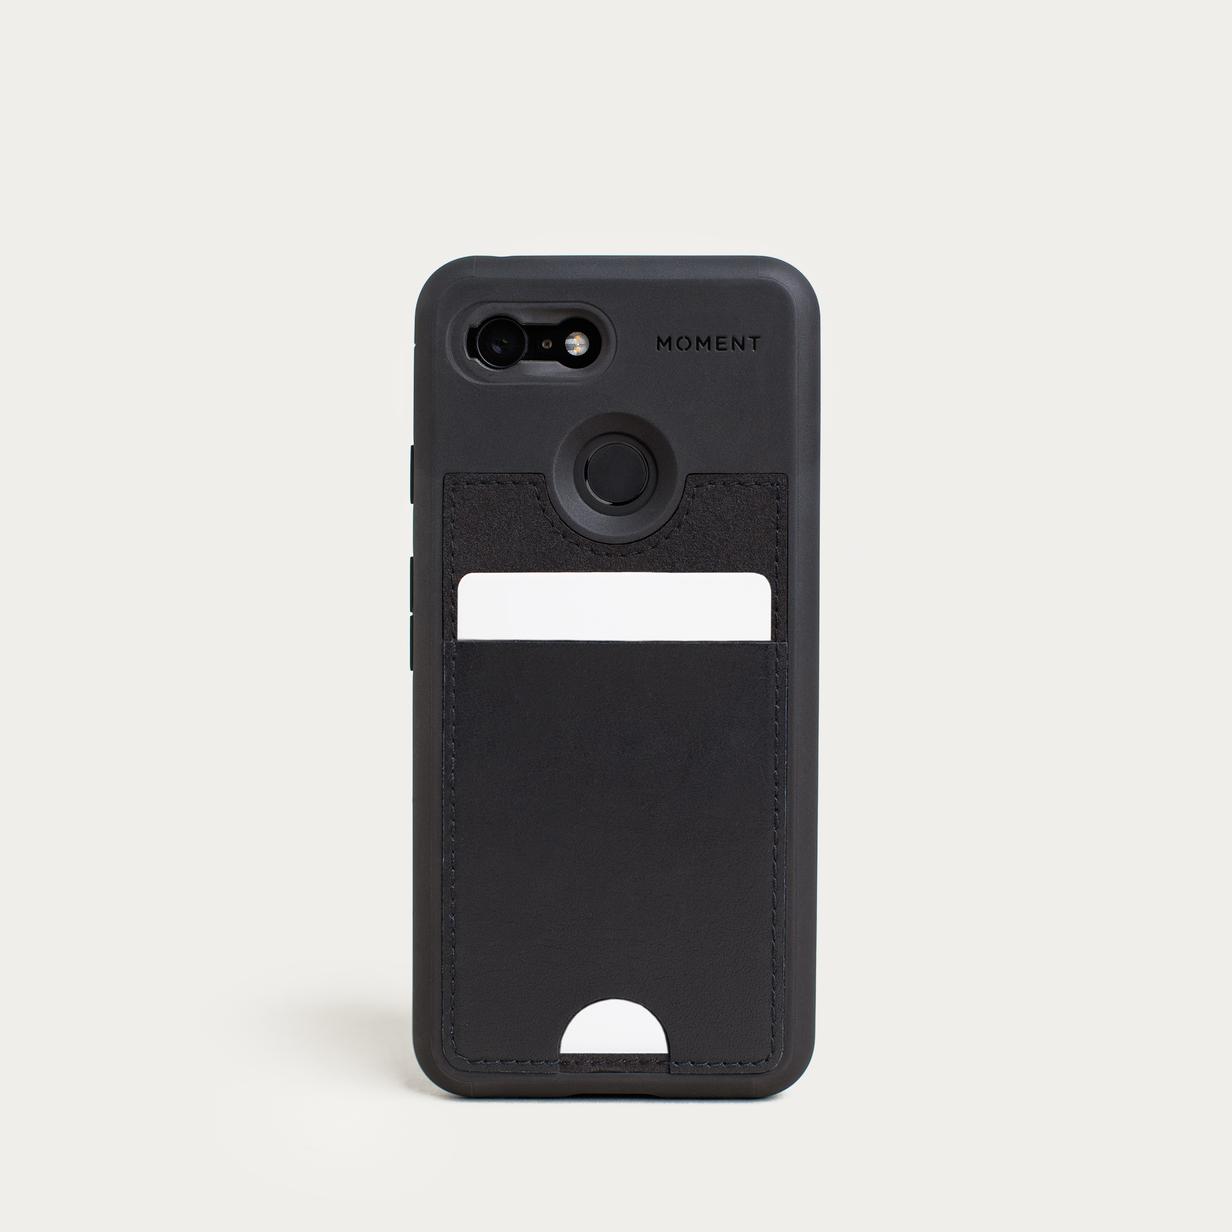 Moment pixel 3 wallet case black 01